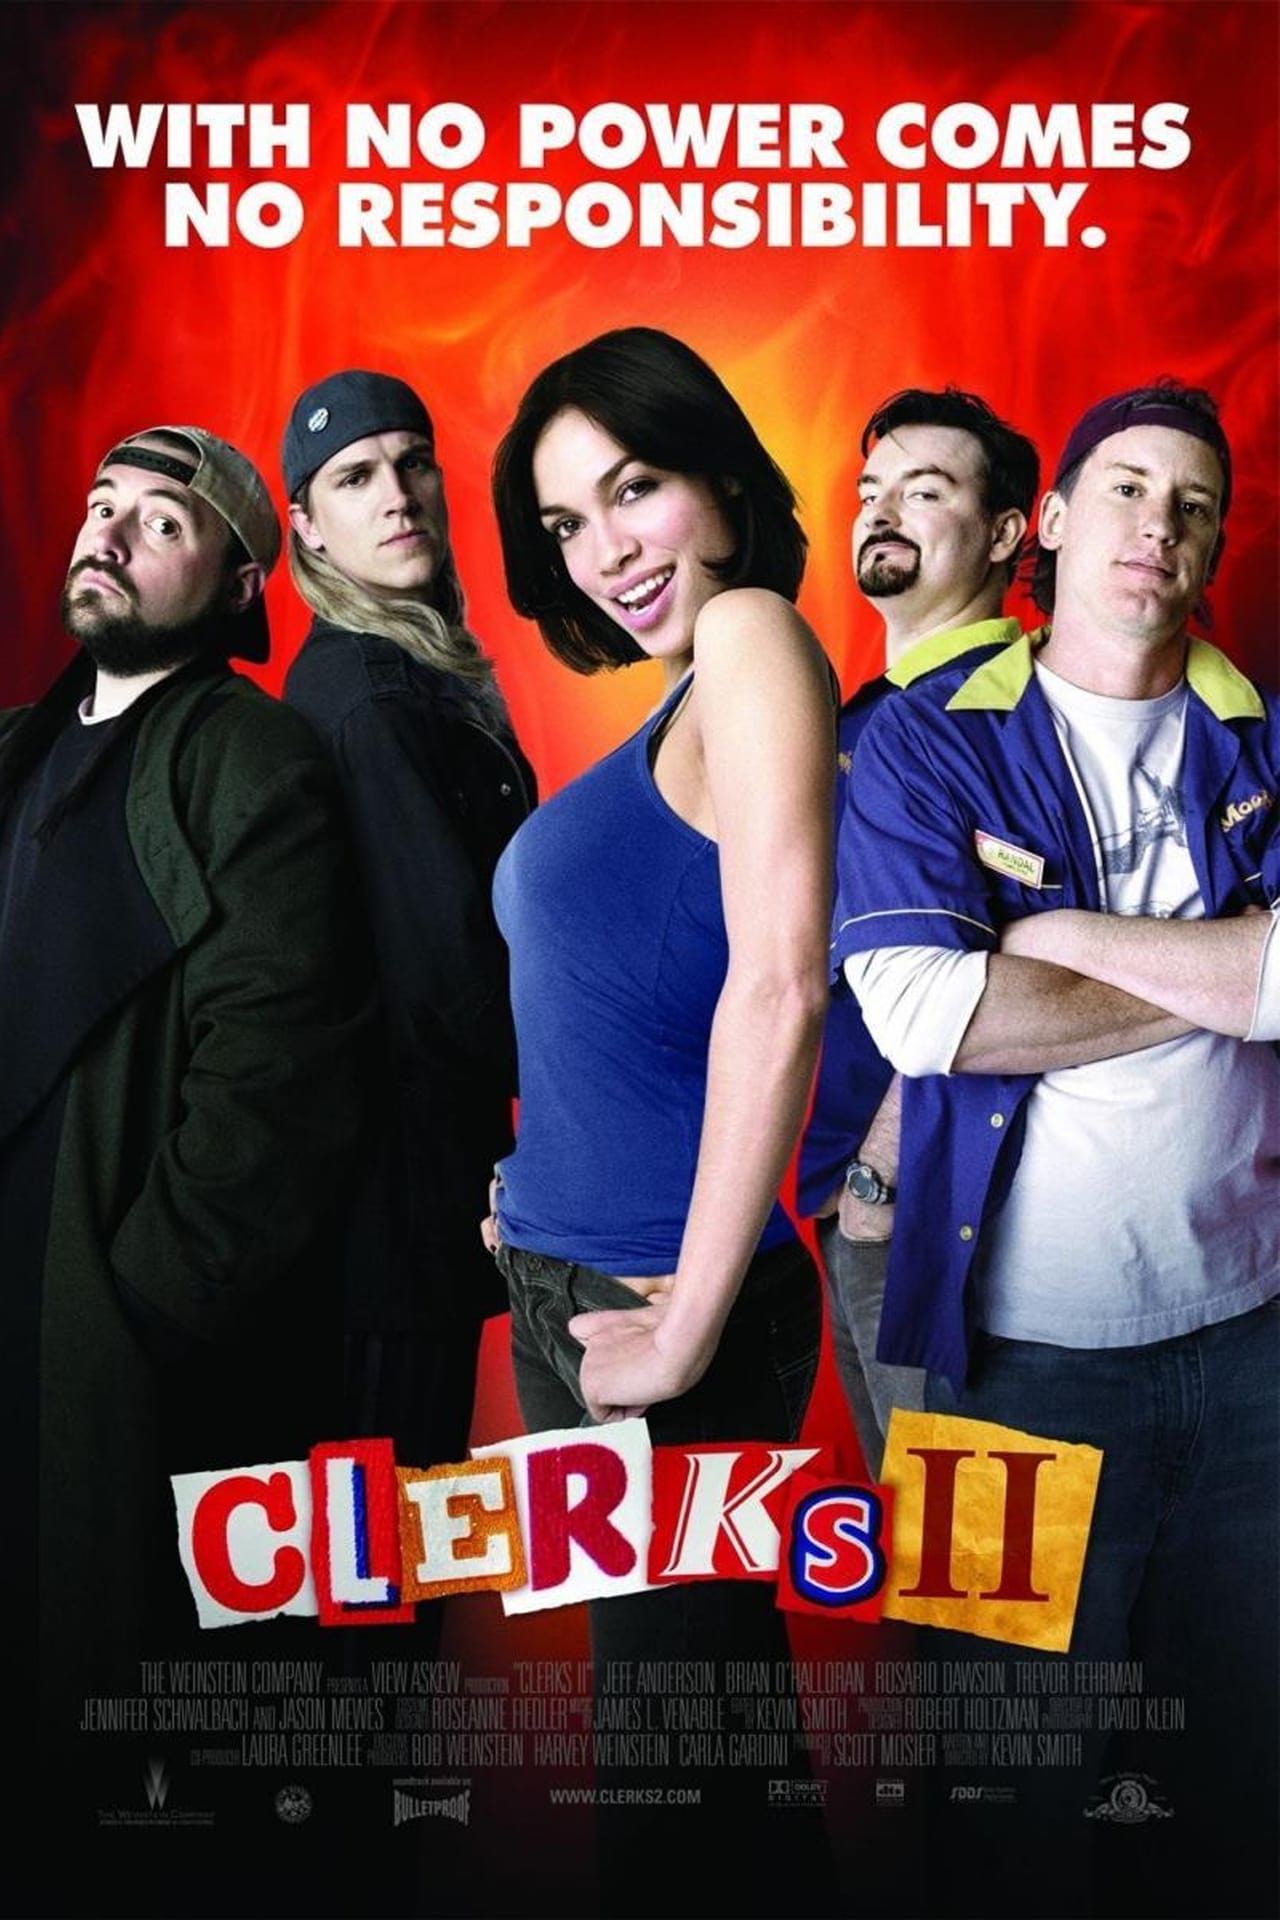 EN - Clerks 2 (2006) - Jay And Silent Bob